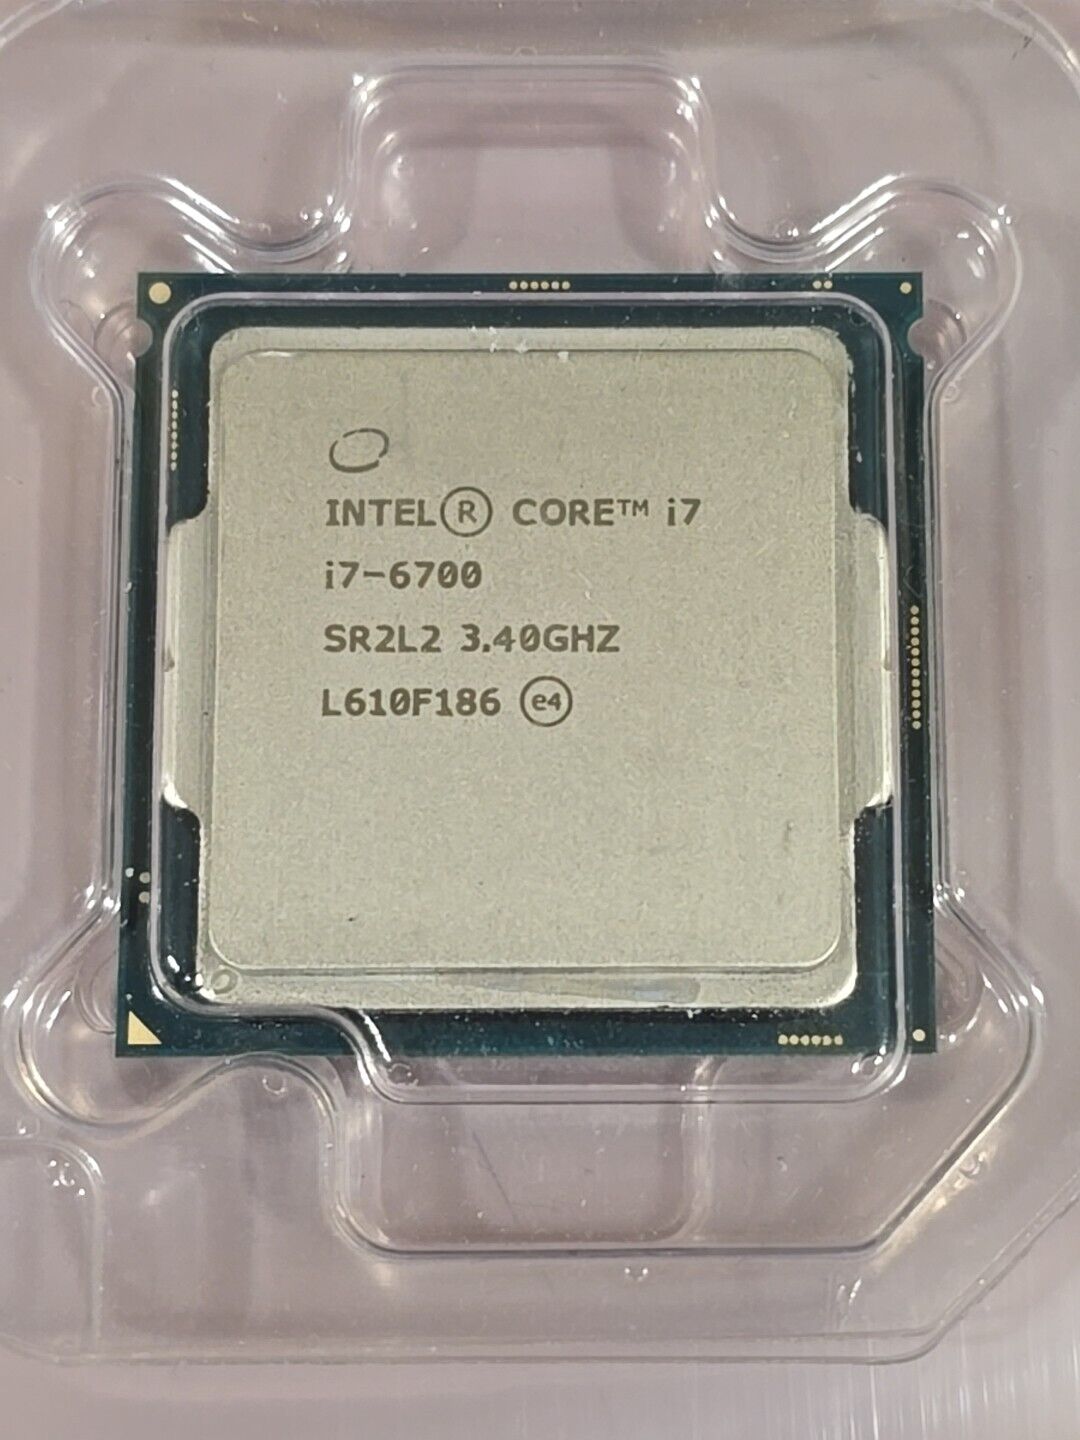 Intel Core i7-6700 - 3.40GHz Quad Core CPU Processor